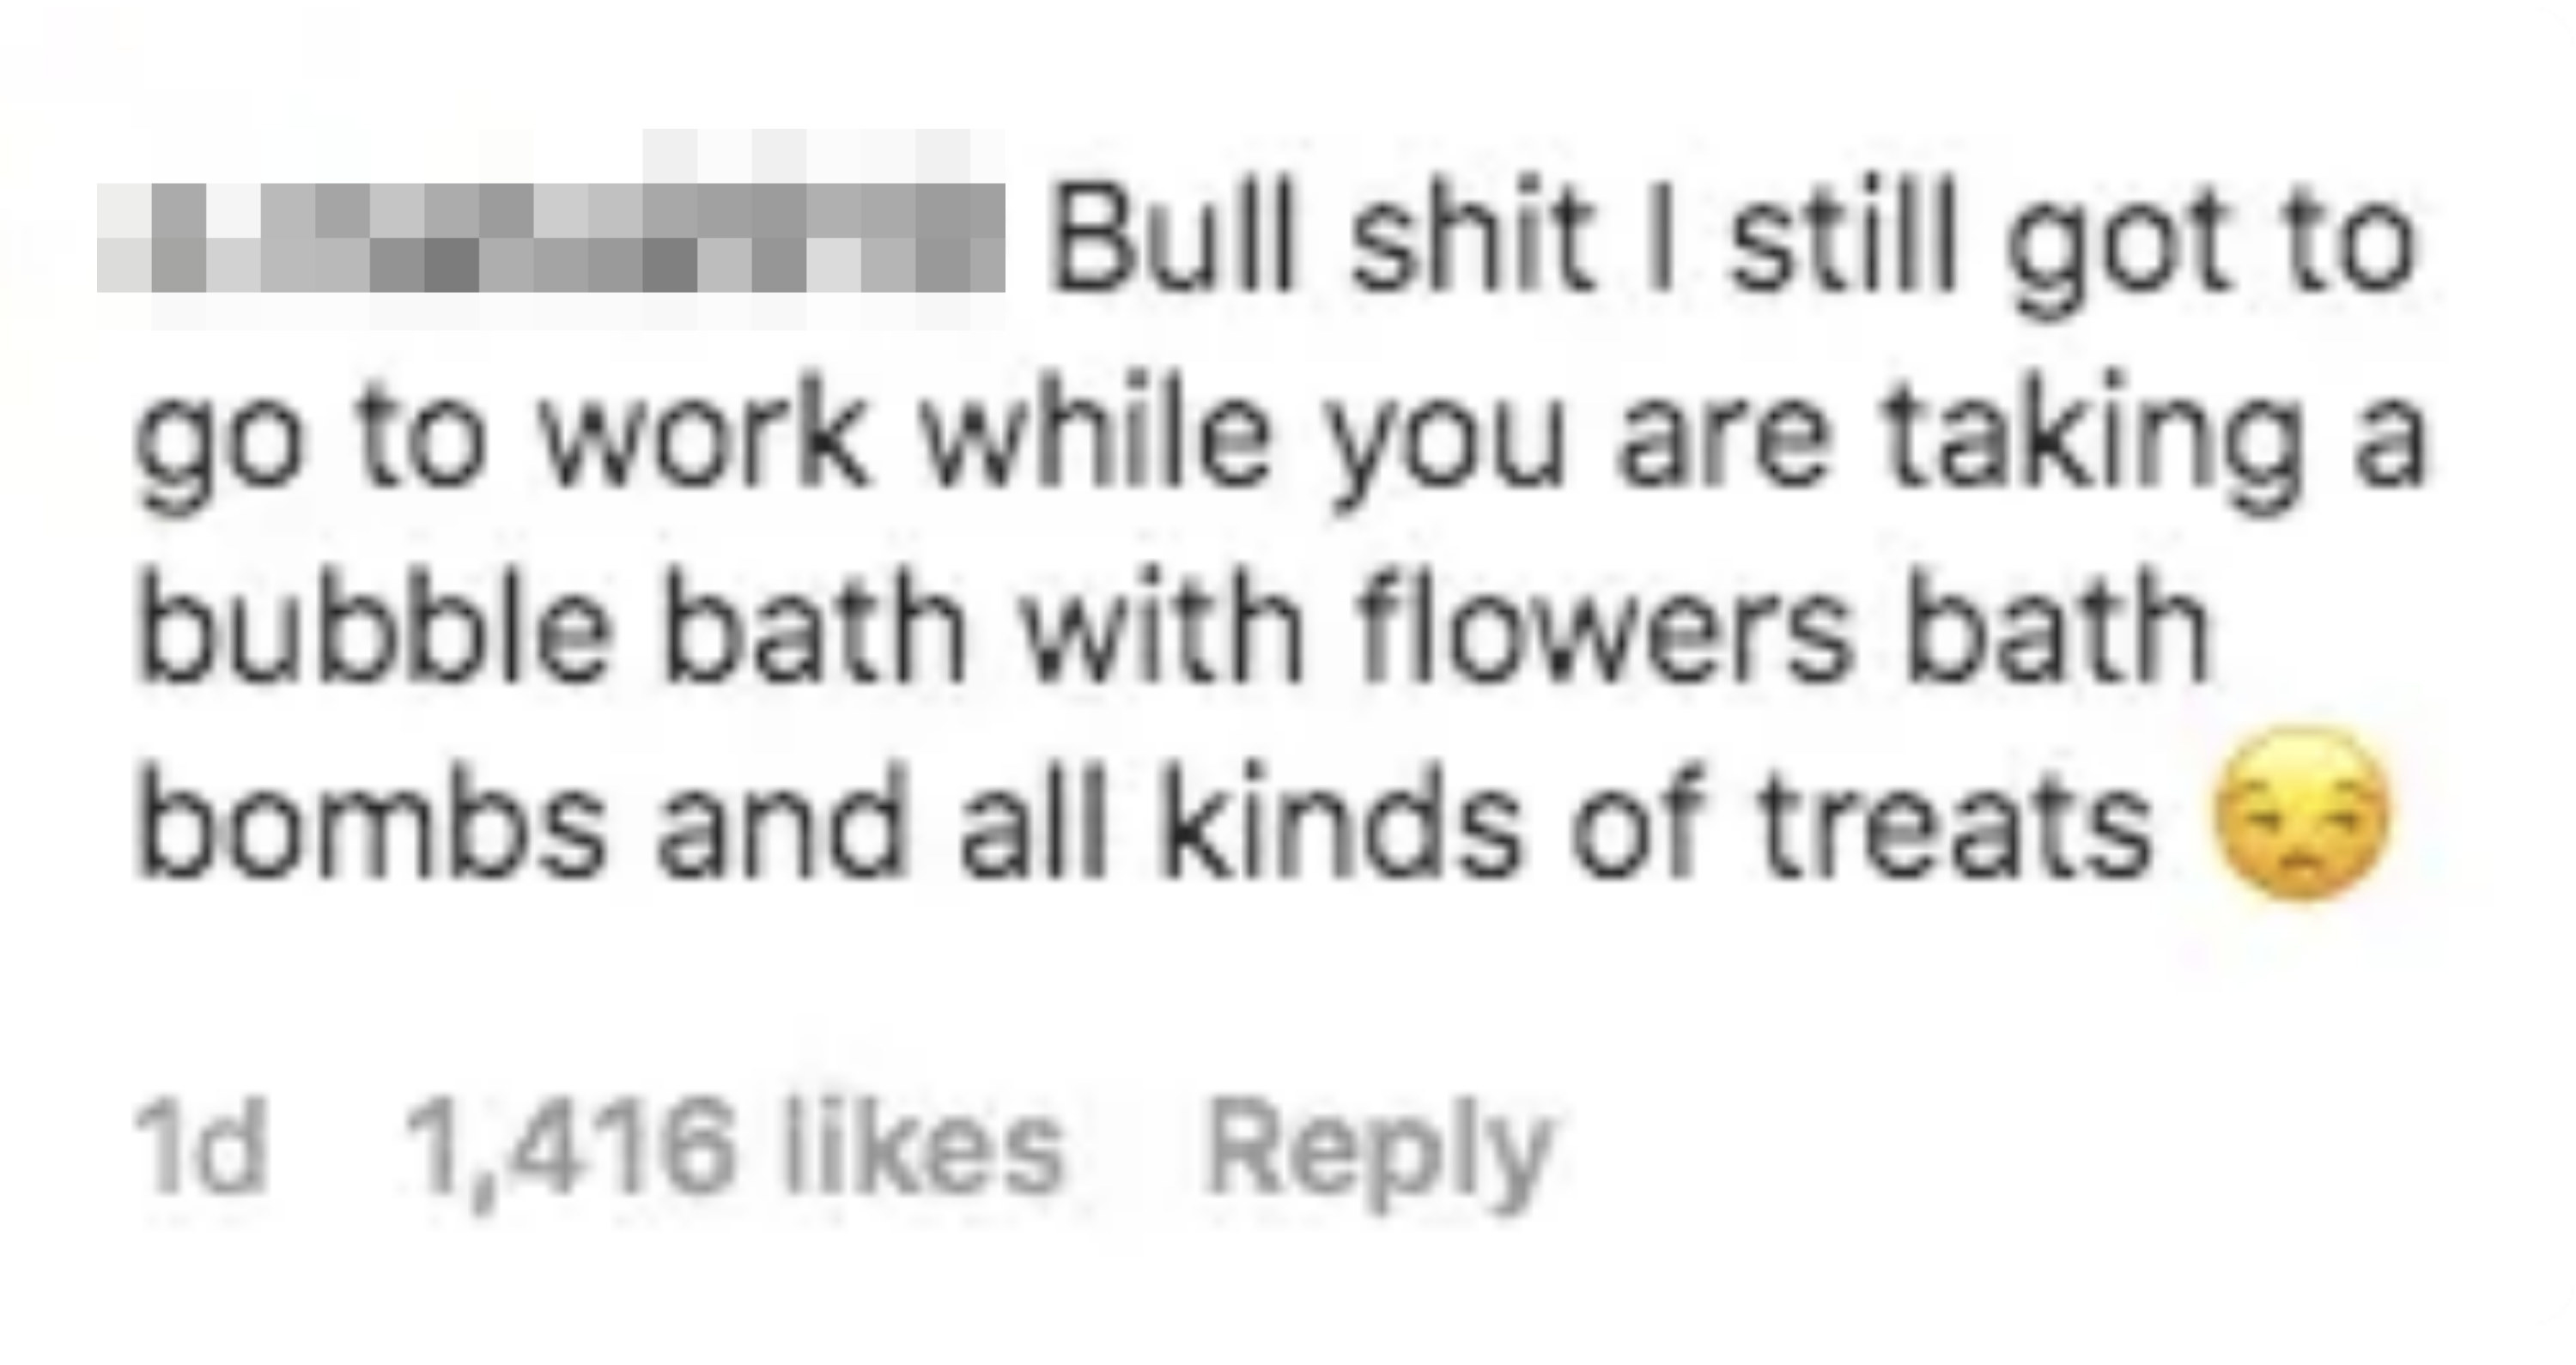 Screenshot of an Instagram comment